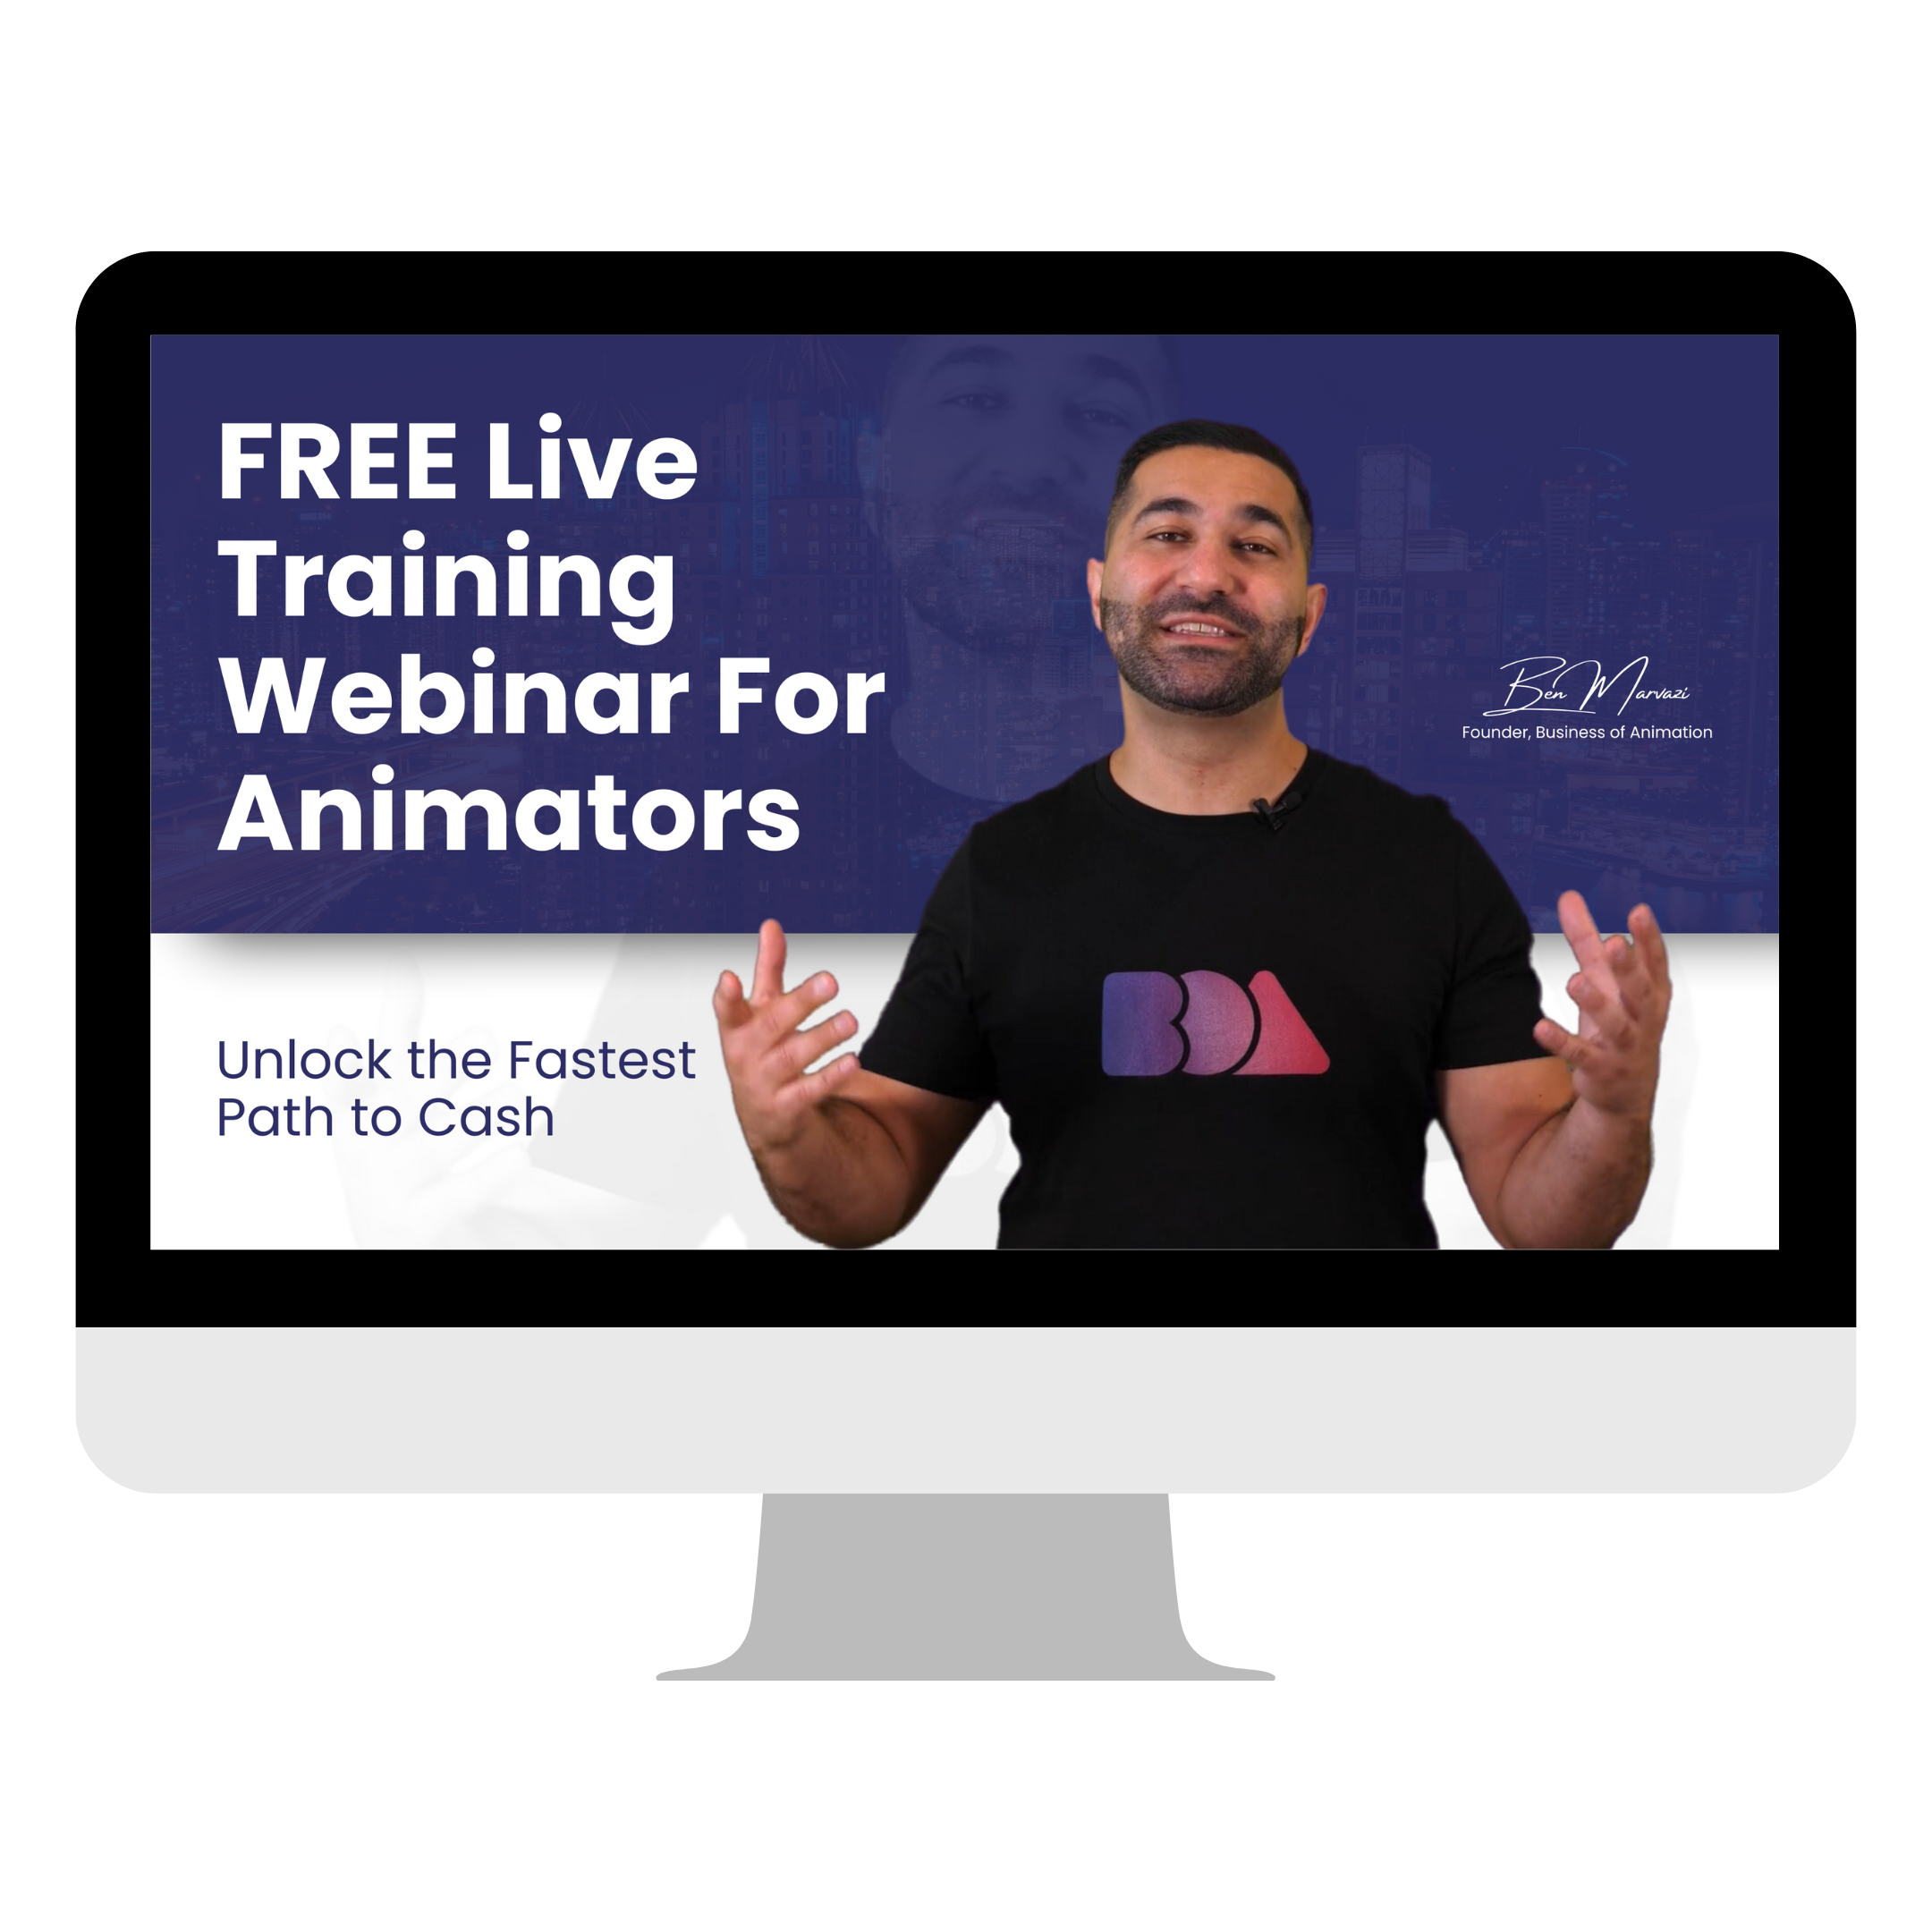 ben marvazi promoting webinars for freelance animators and studio owners